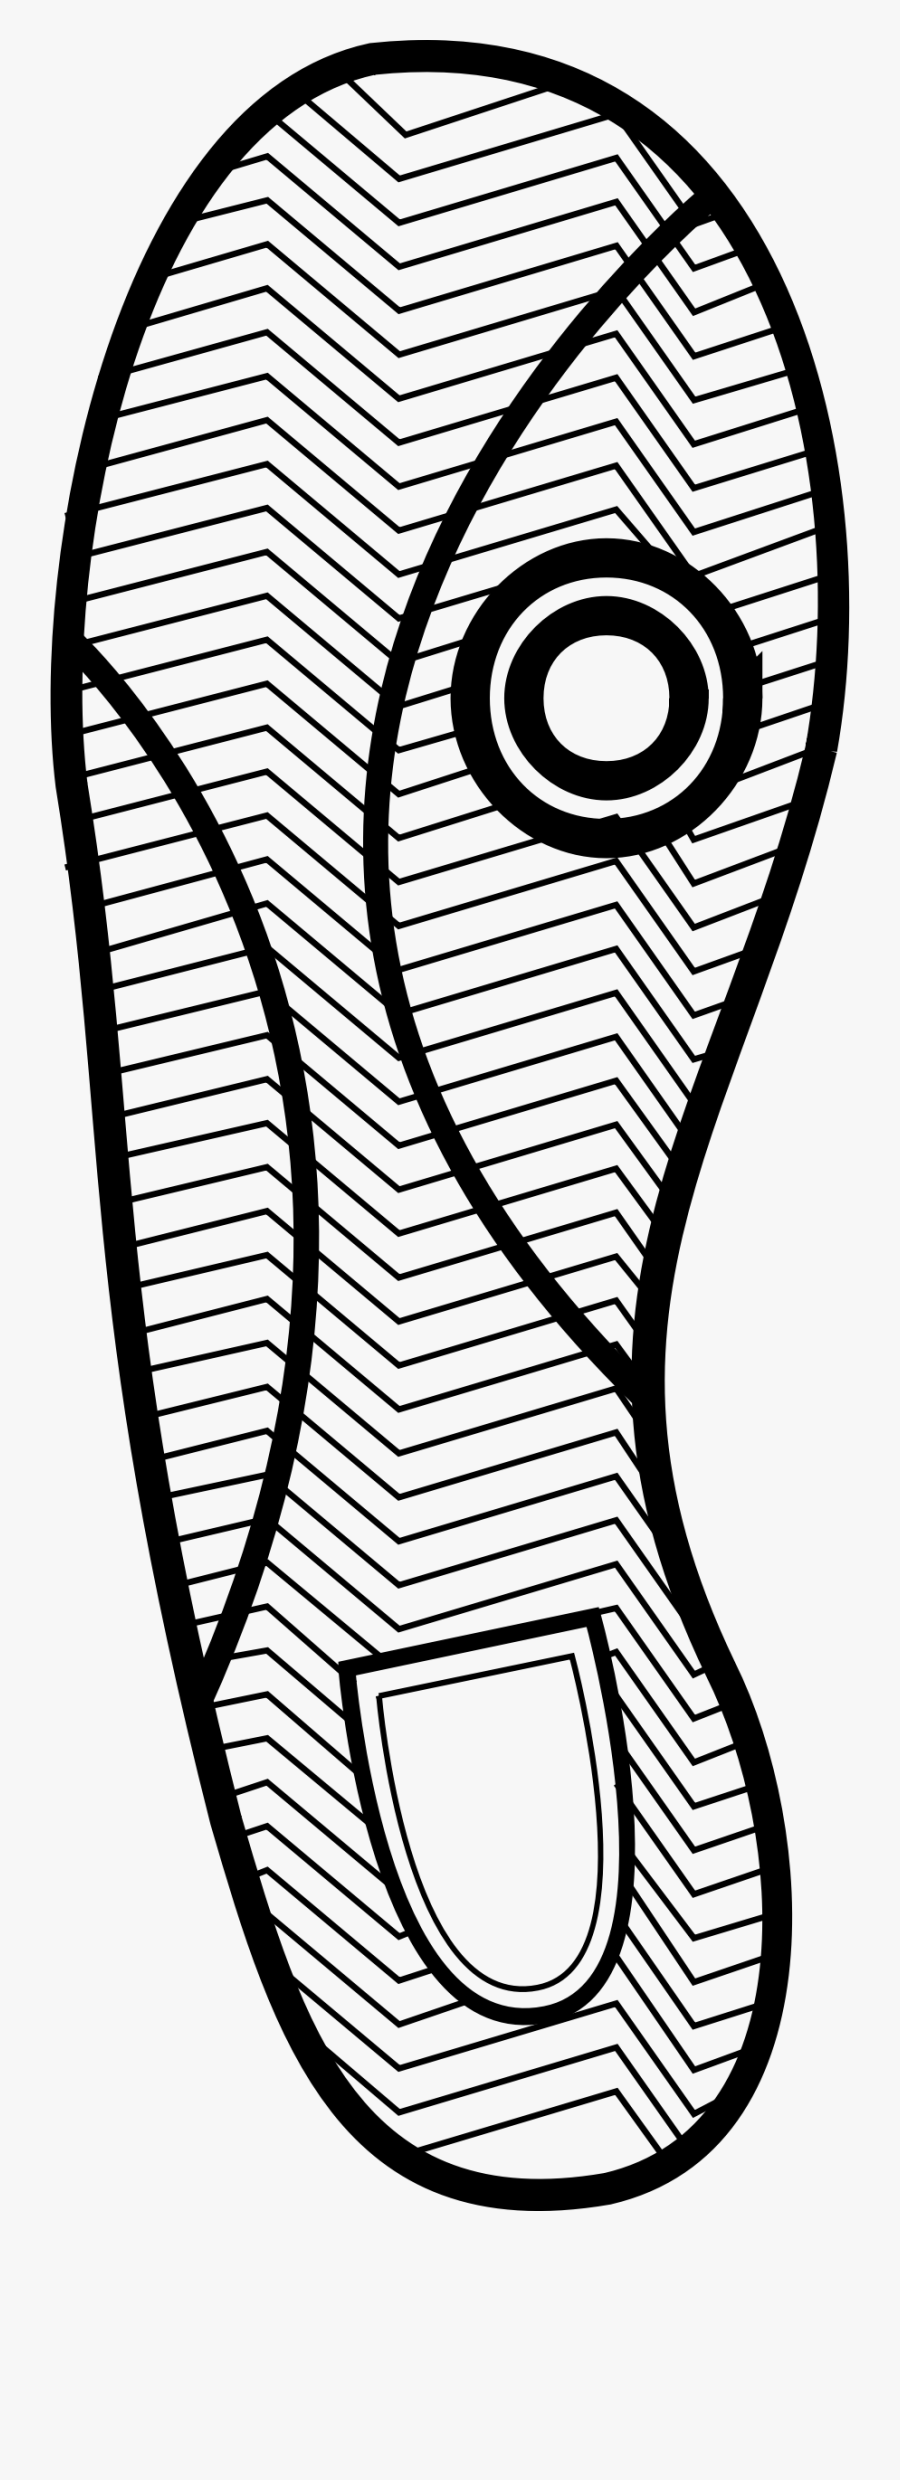 Shoe Print Drawing At Getdrawings - Shoe Print Clip Art, Transparent Clipart